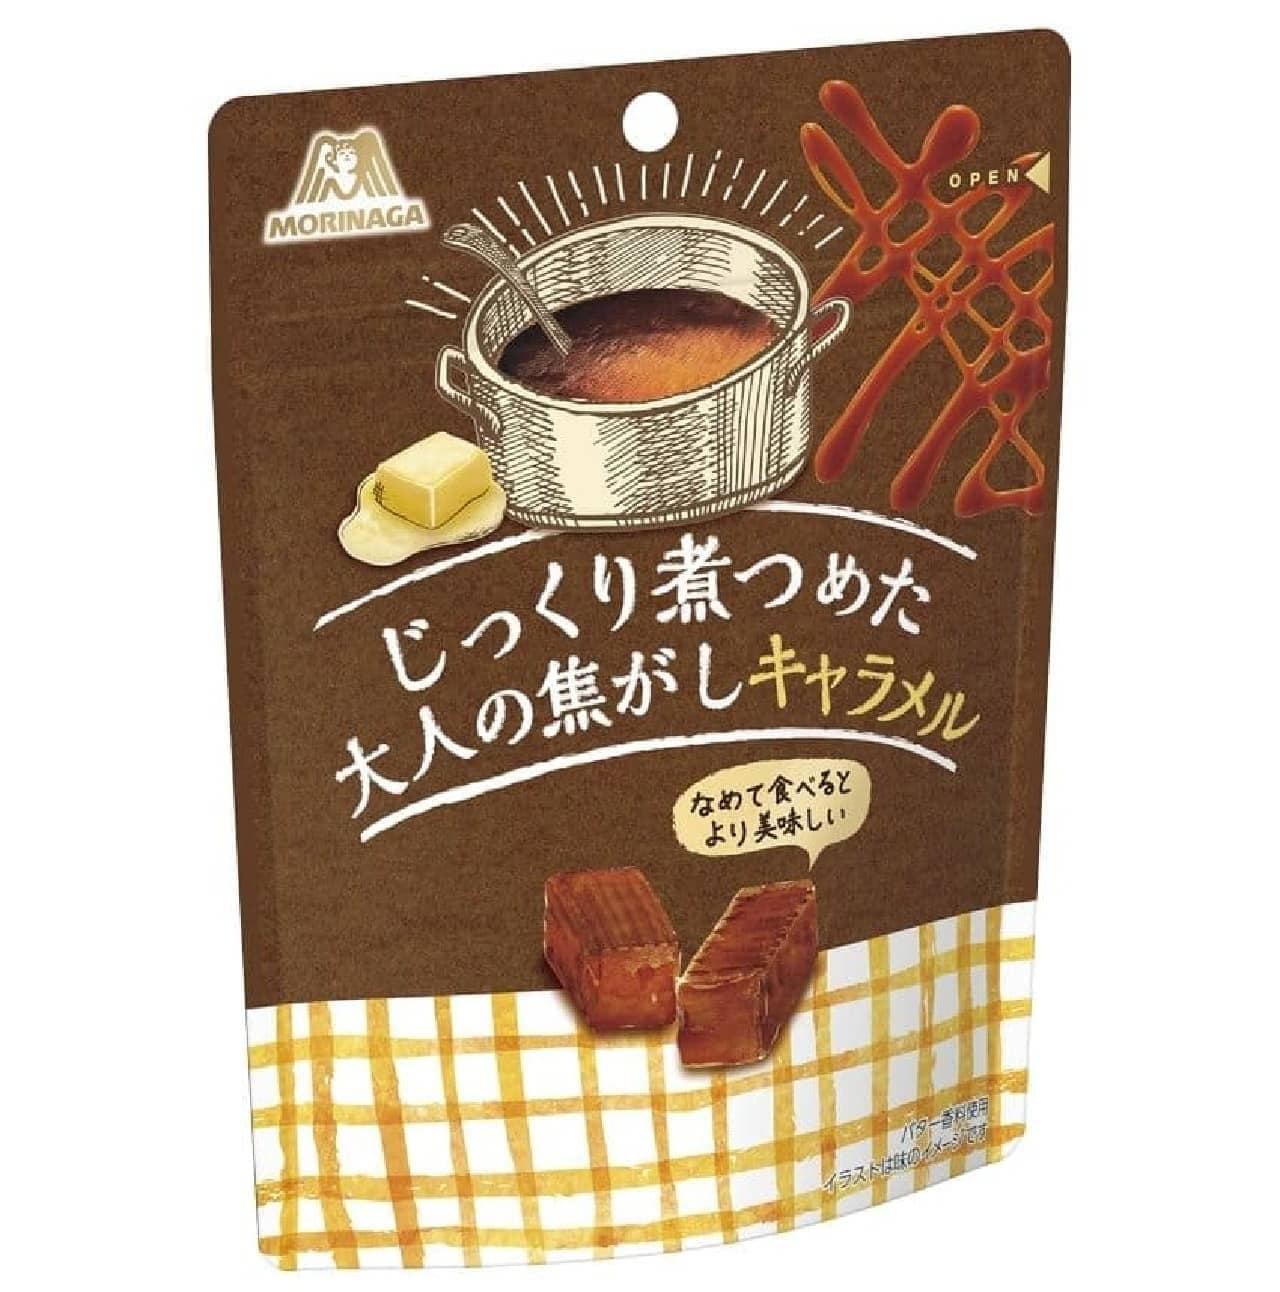 Morinaga Seika "Slowly Cooked Adult Burnt Caramel